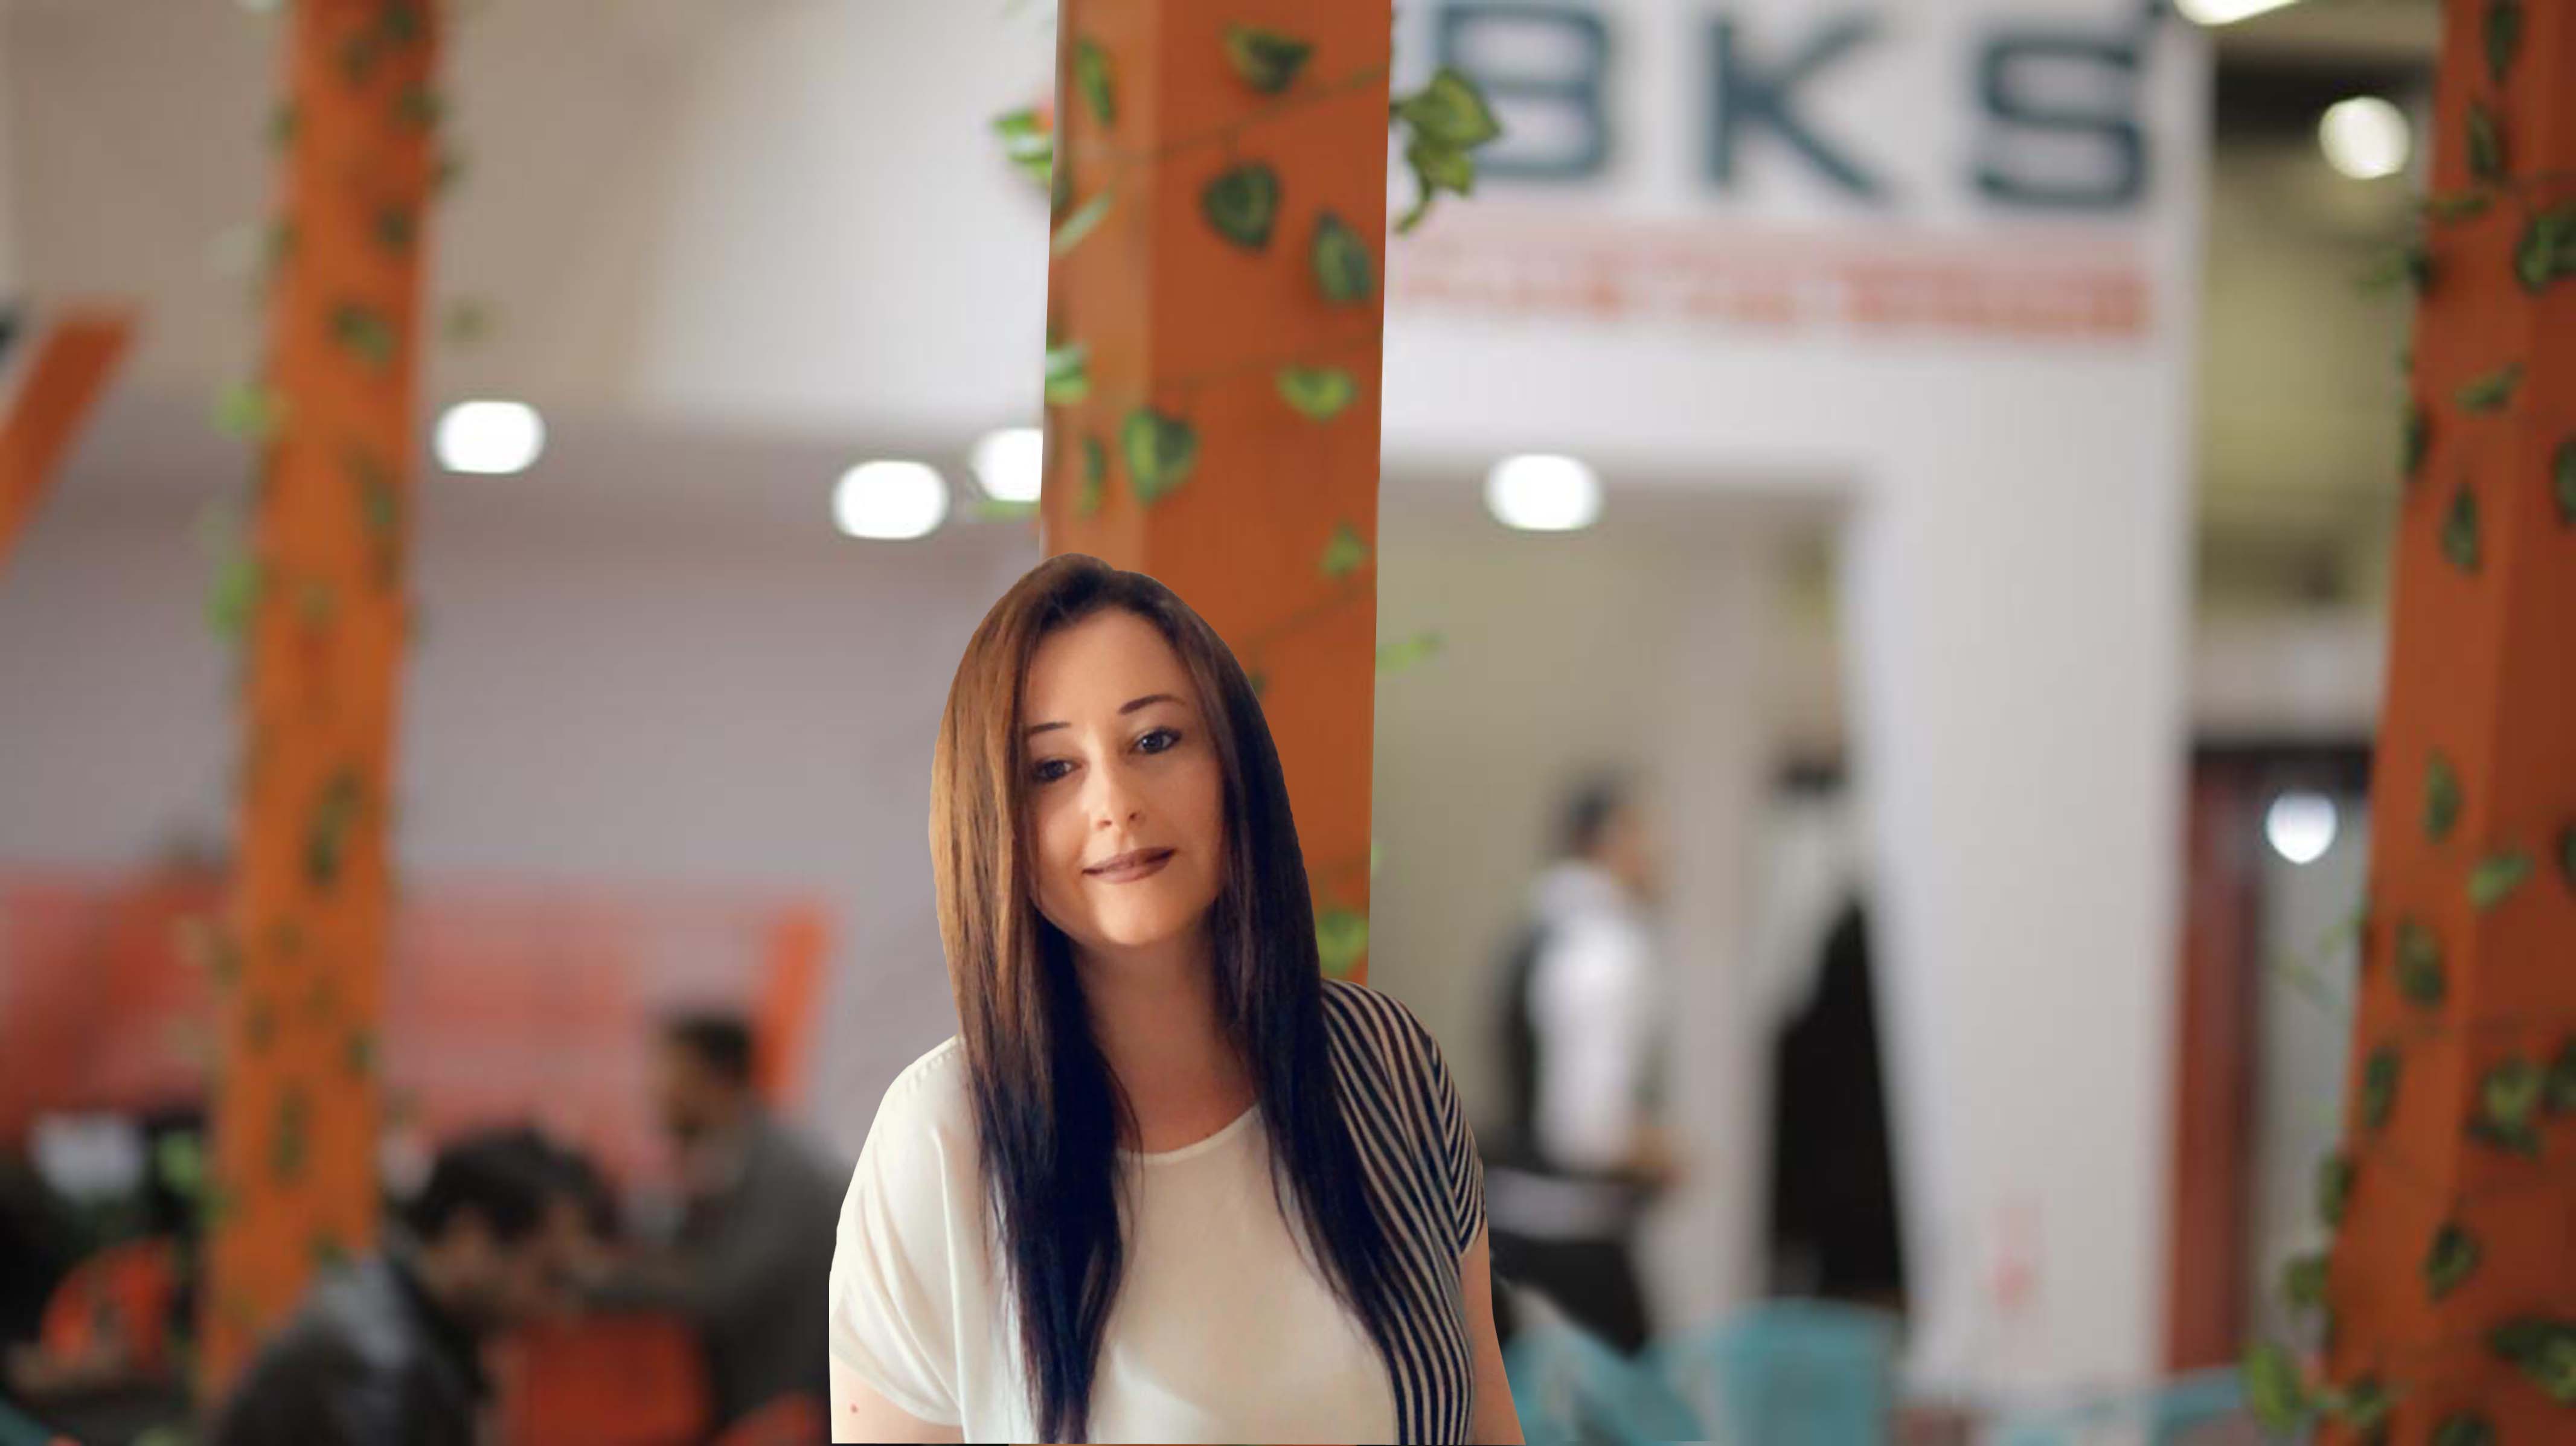 BKS Turkey Sales Executive